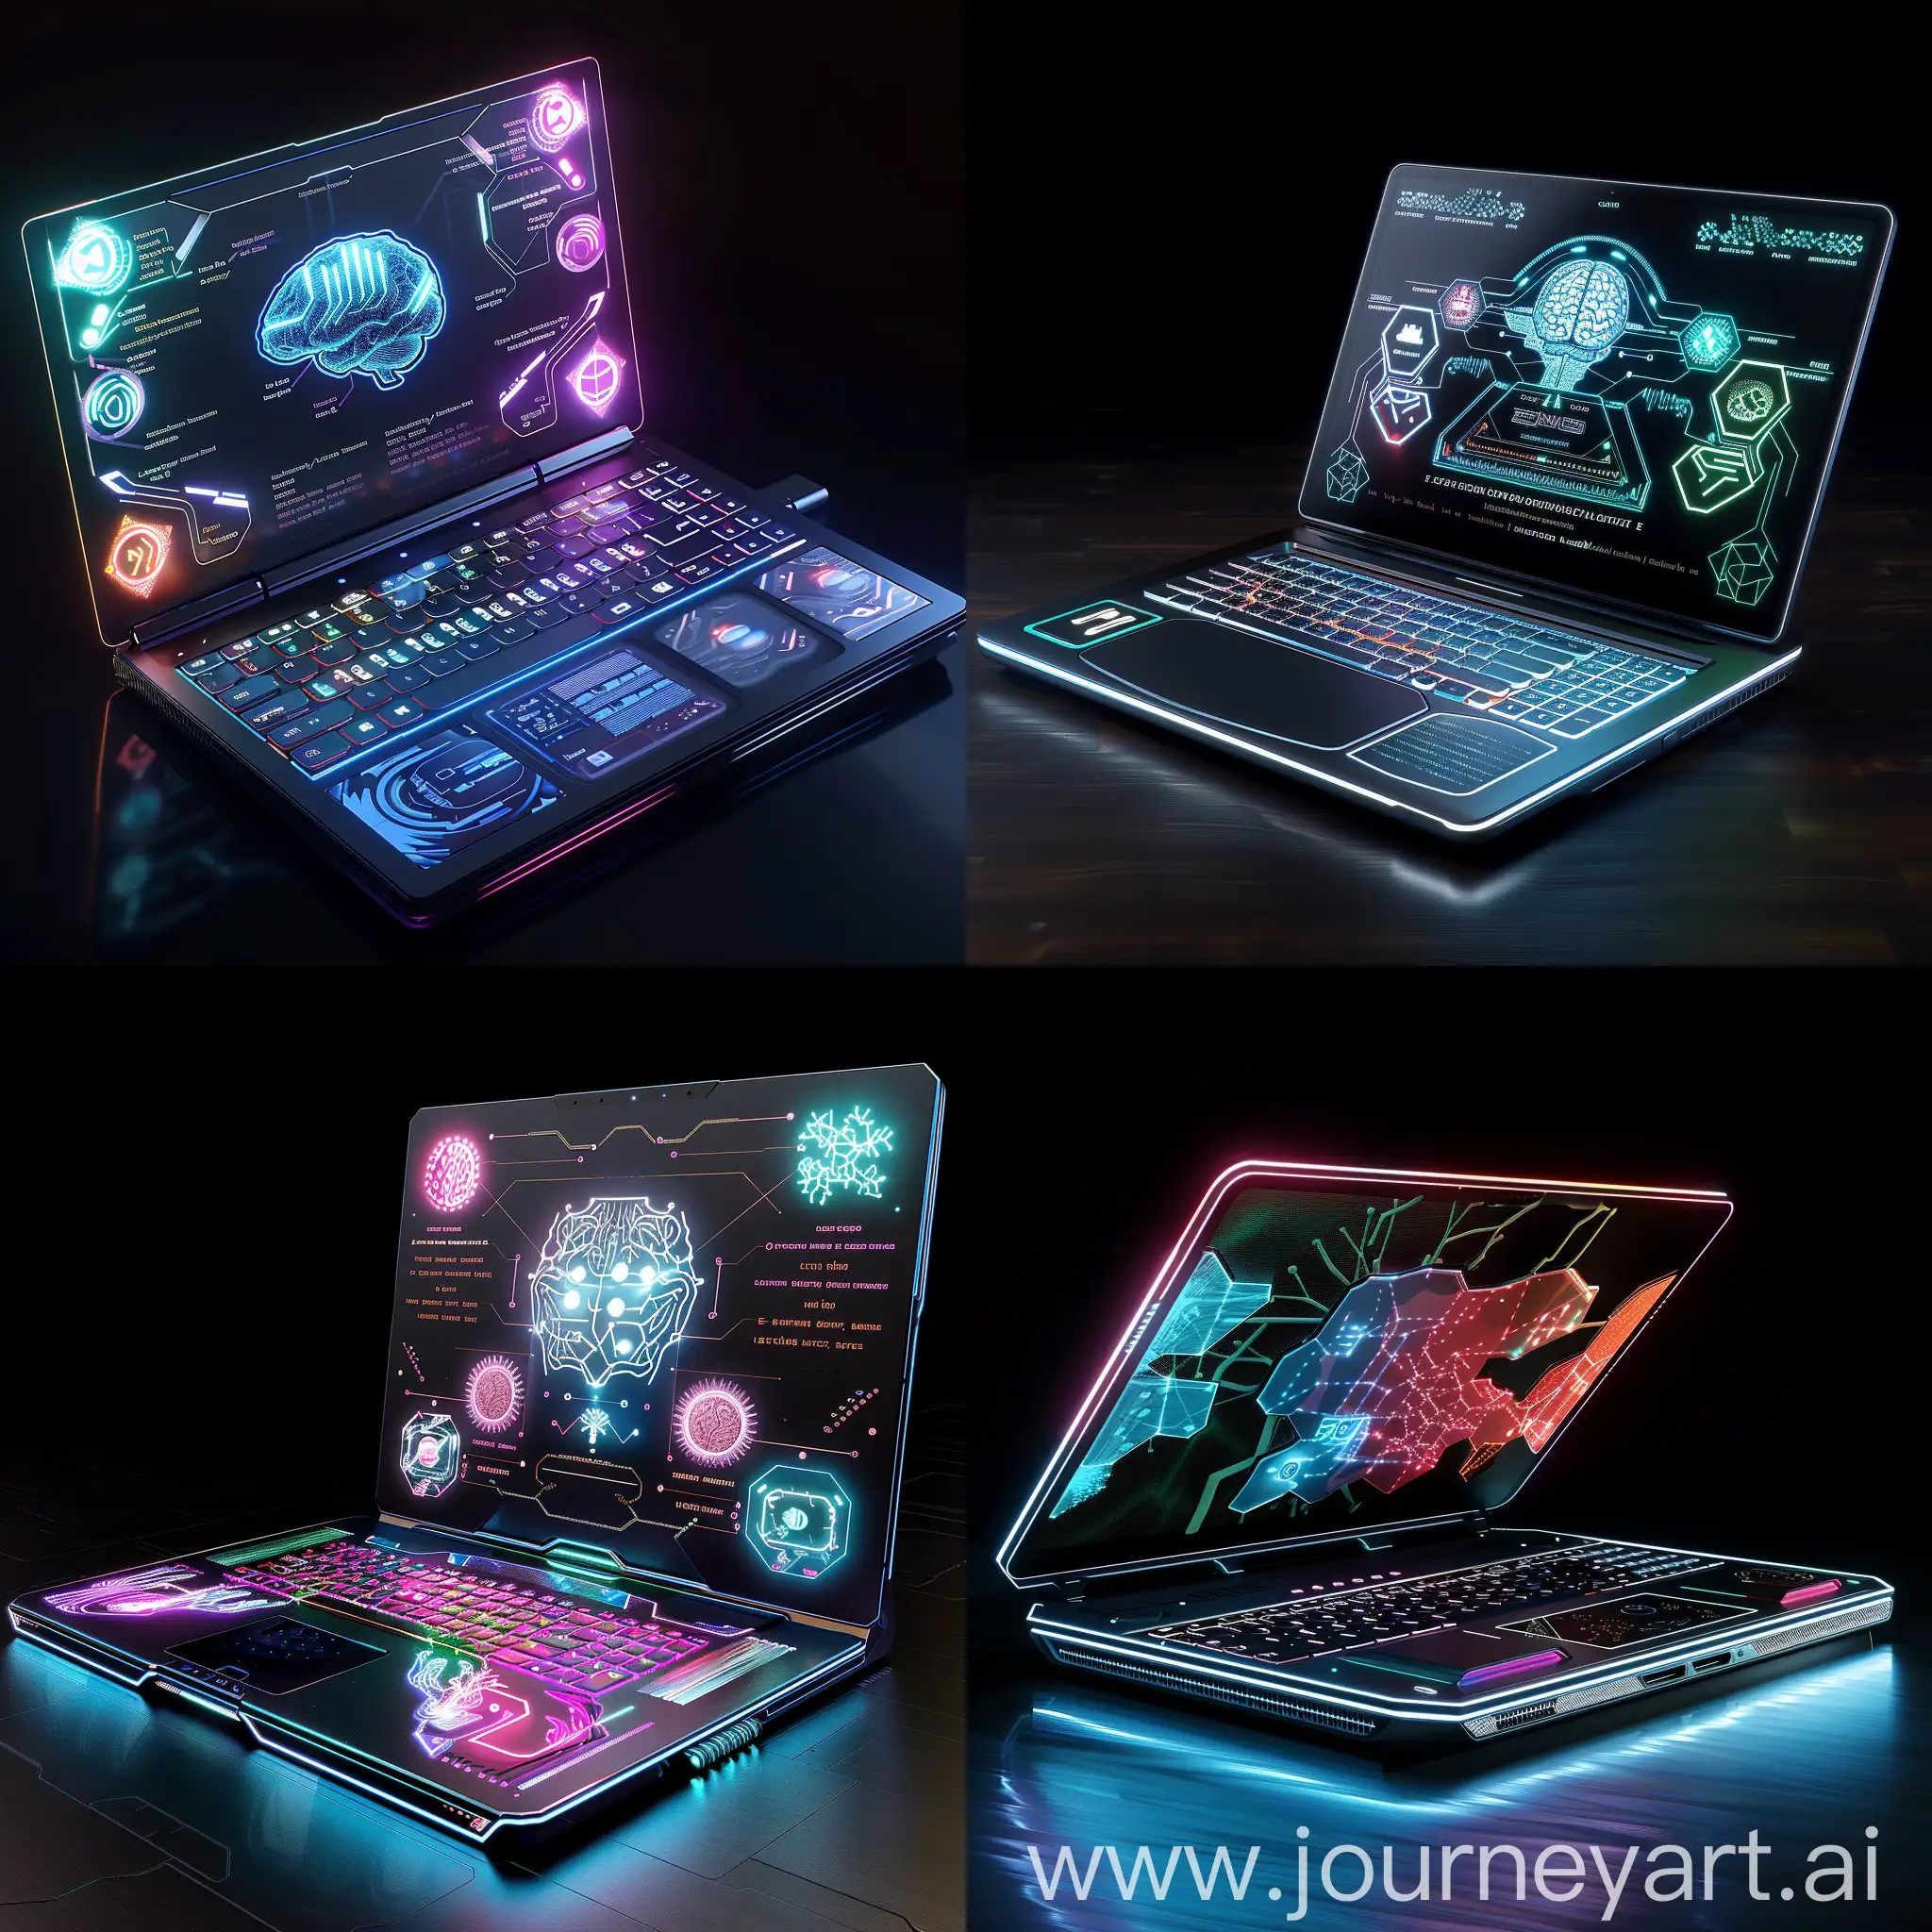 Futuristic-Laptop-with-Quantum-Computing-Processor-and-Holographic-Display